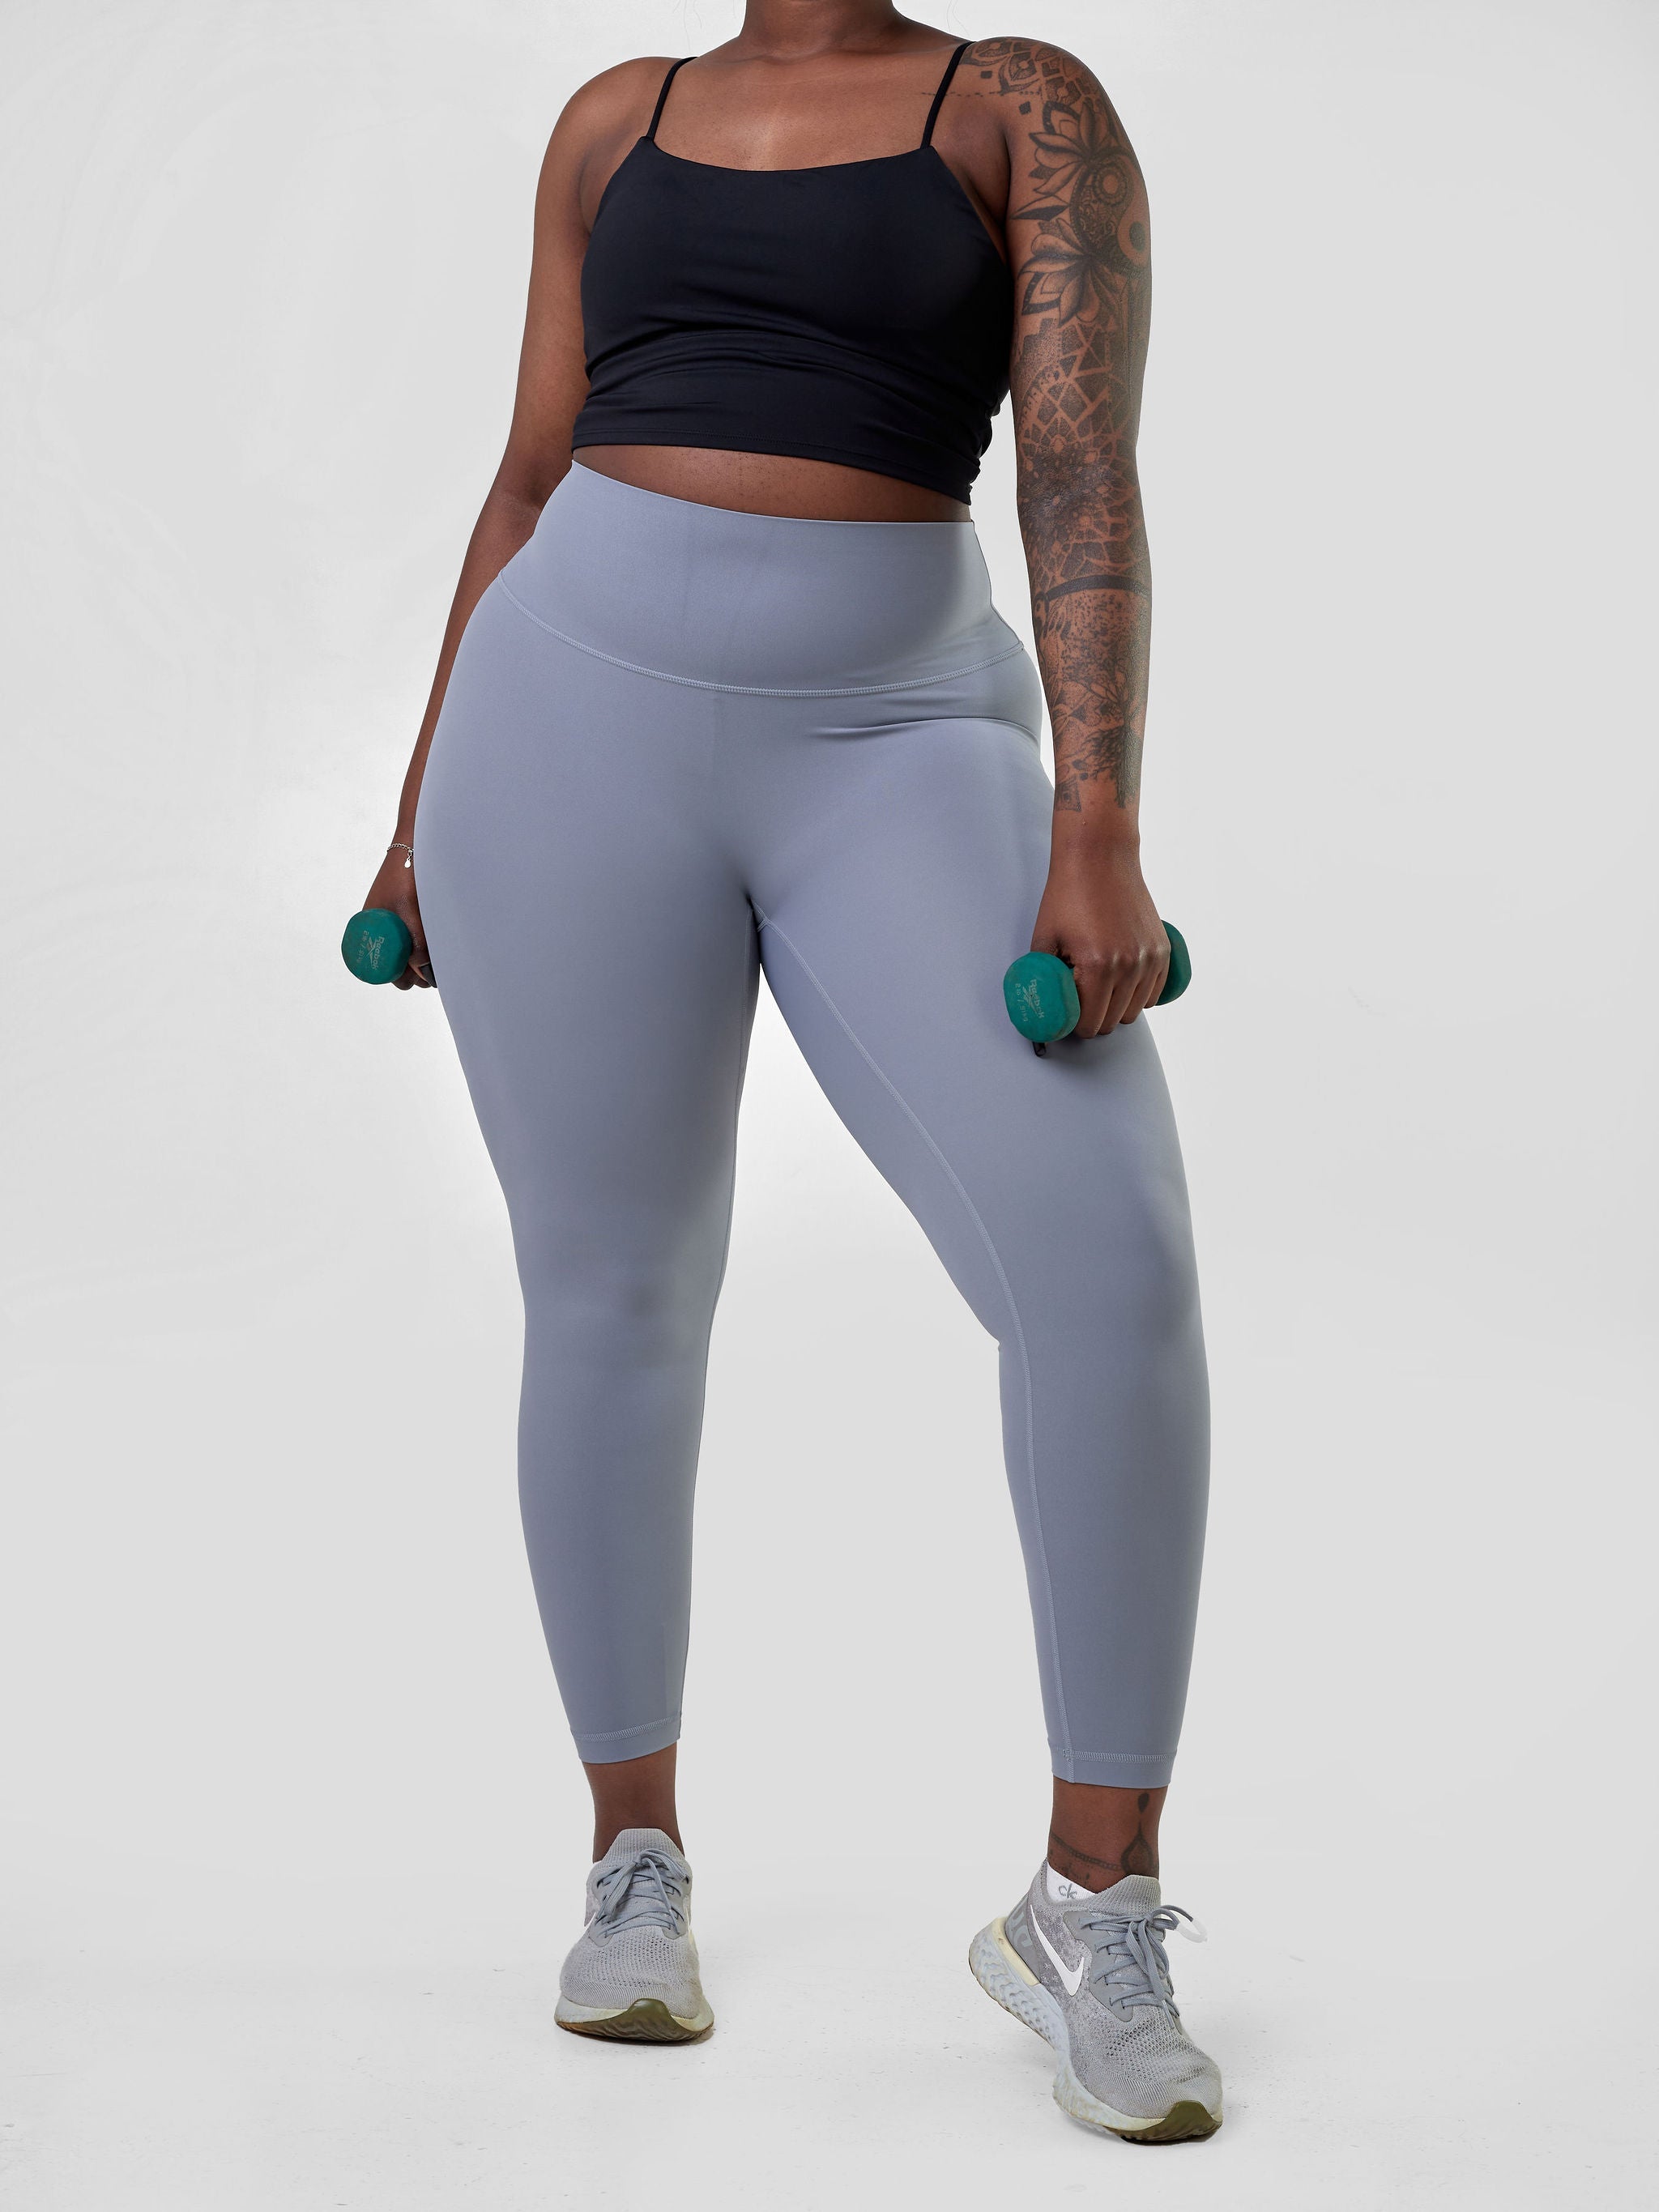 Ava Fitness Bella Workout Leggings - Grey Blue